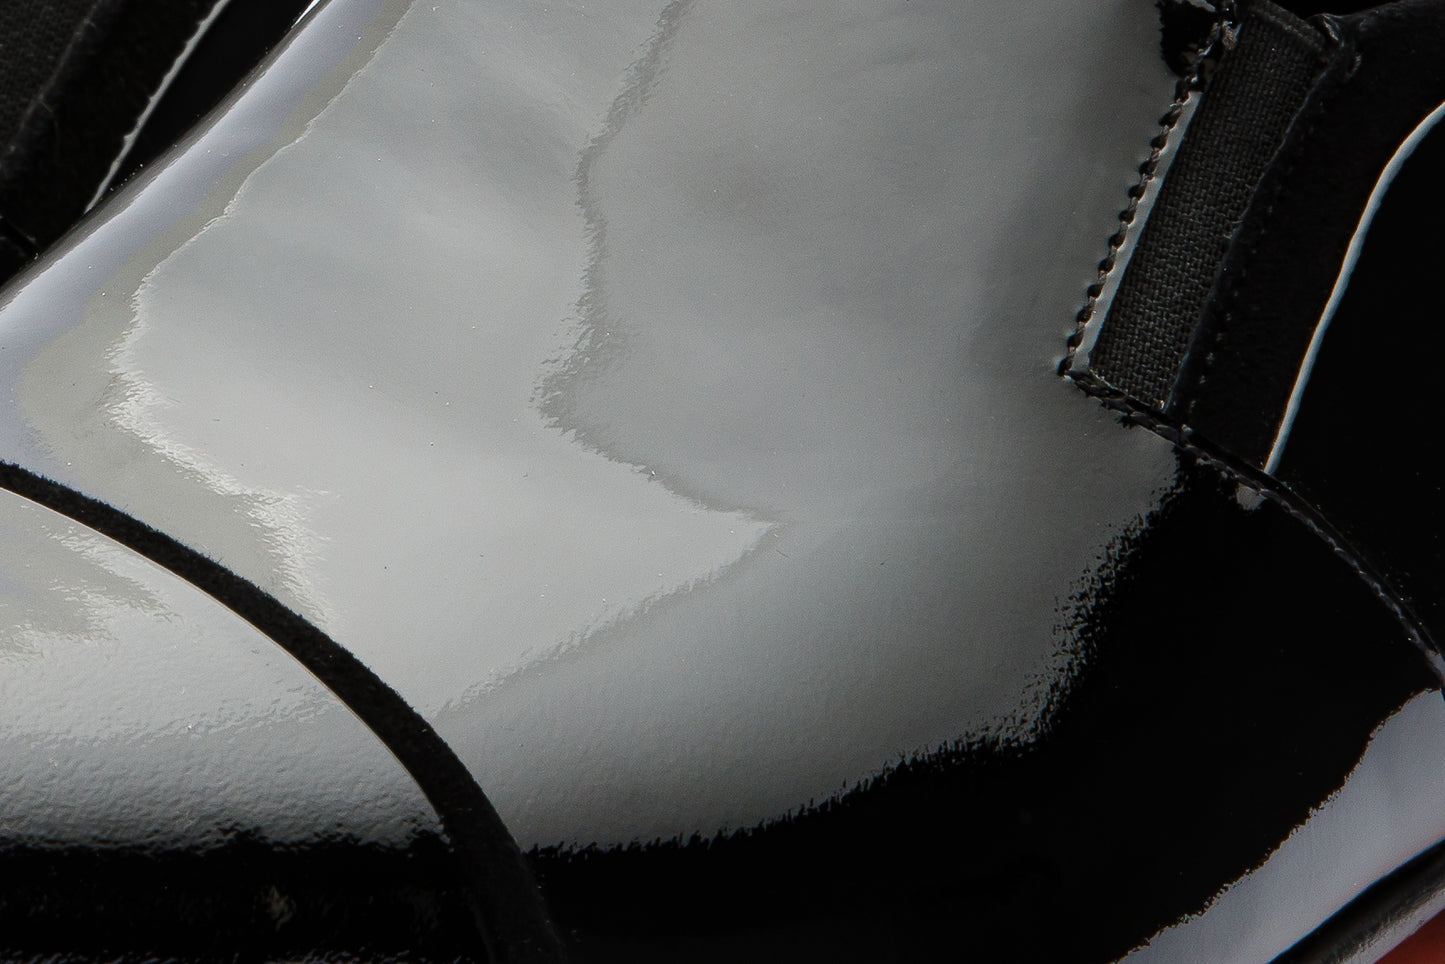 The Marlo Shoe Black Patent Leather Cap Toe Slip-On Dress Loafer Men  Shoe